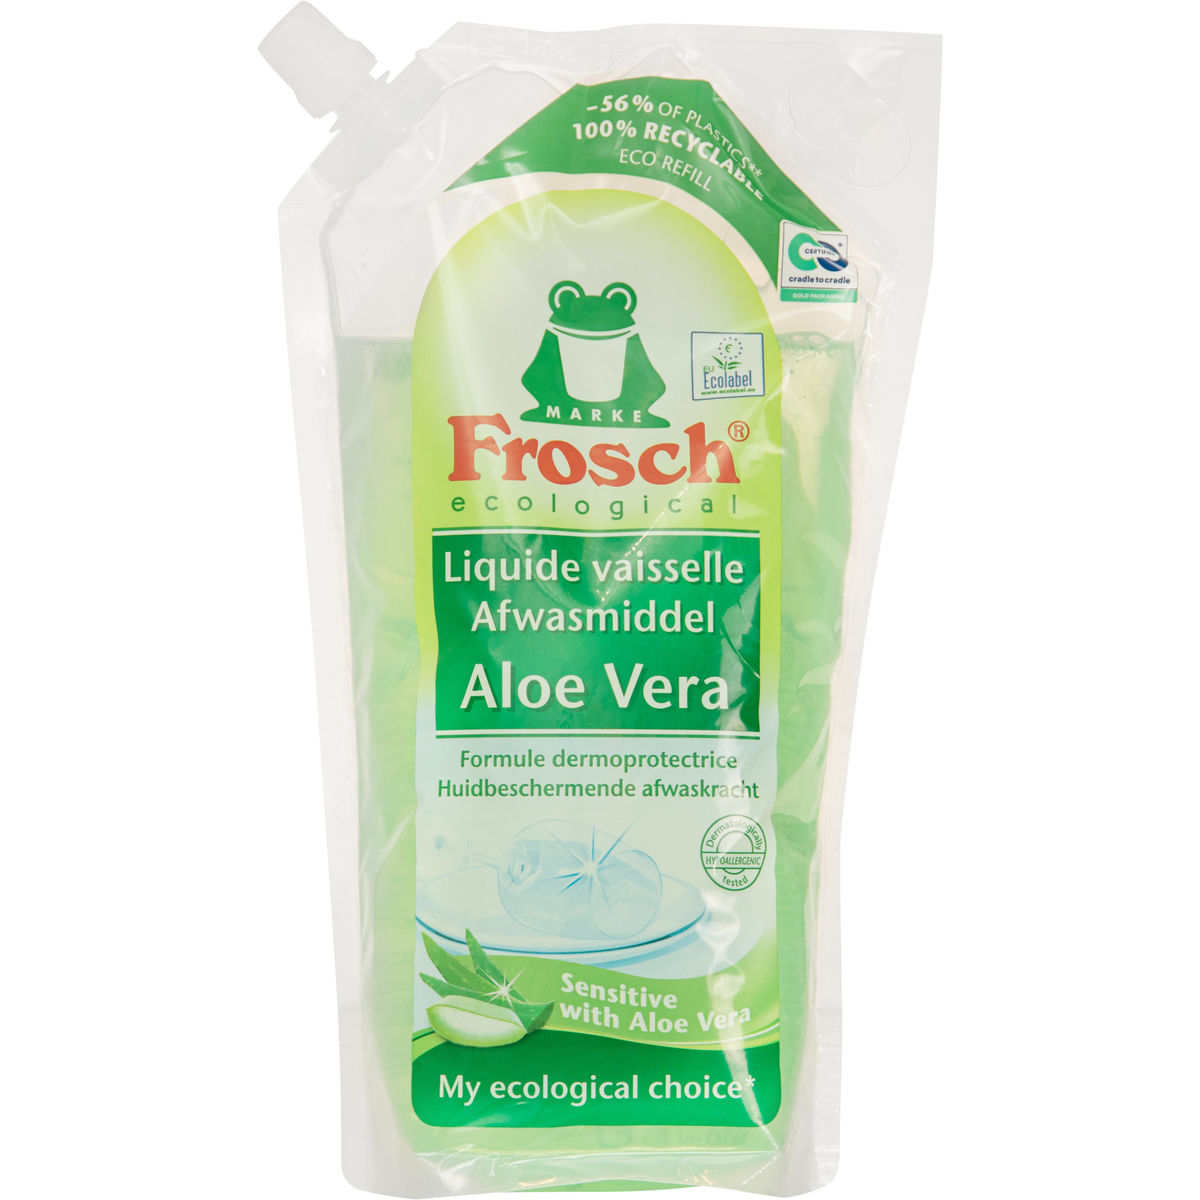 Frosch Ecological Liquide Vaisselle Aloe Vera 1000 ml